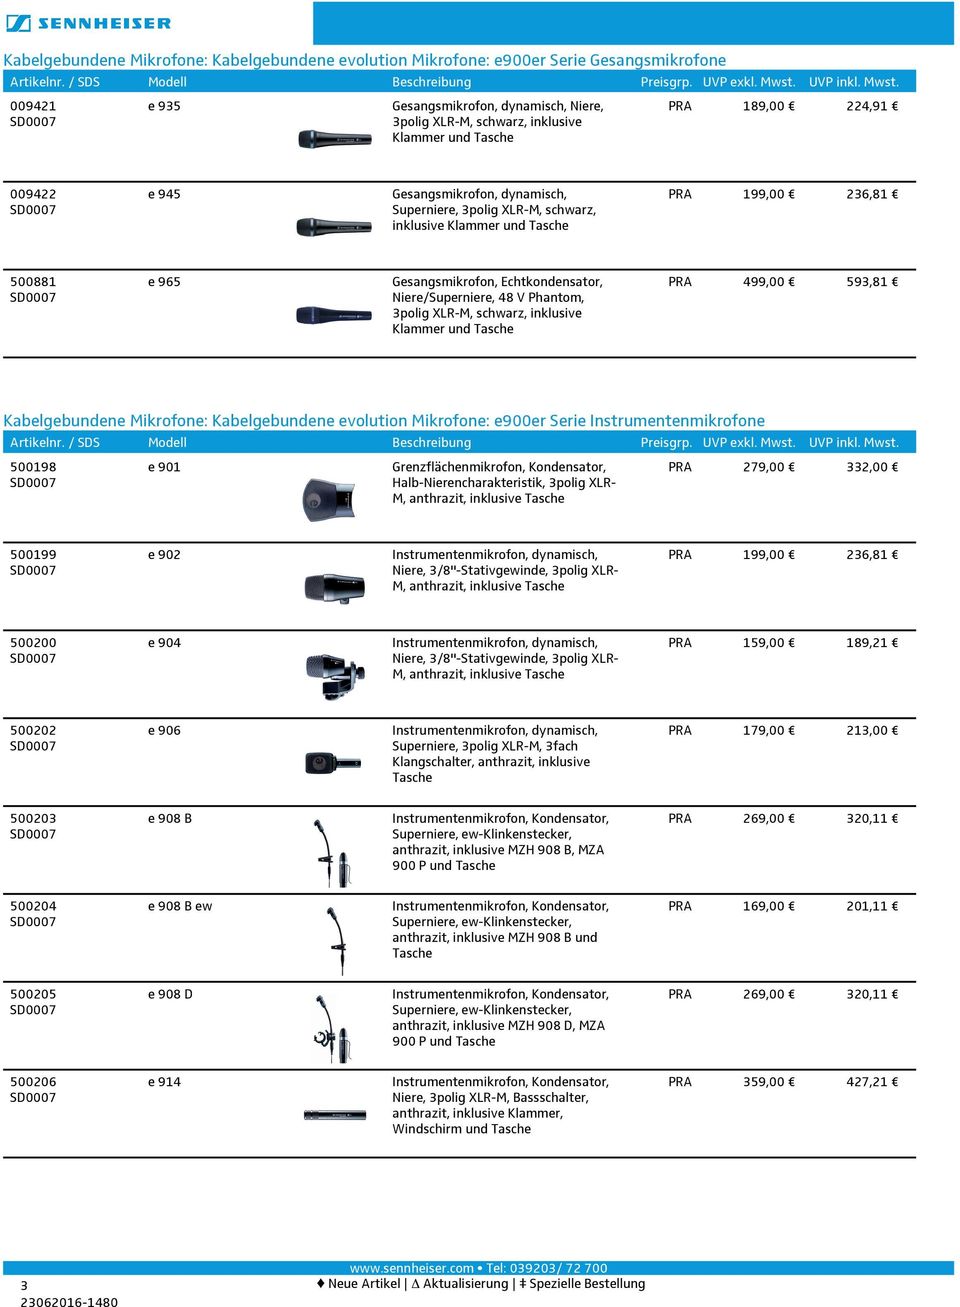 Phantom, 3polig XLR-M,, inklusive Klammer und Tasche PRA 499,00 593,81 Kabelgebundene Mikrofone: Kabelgebundene evolution Mikrofone: e900er Serie Instrumentenmikrofone 500198 e 901